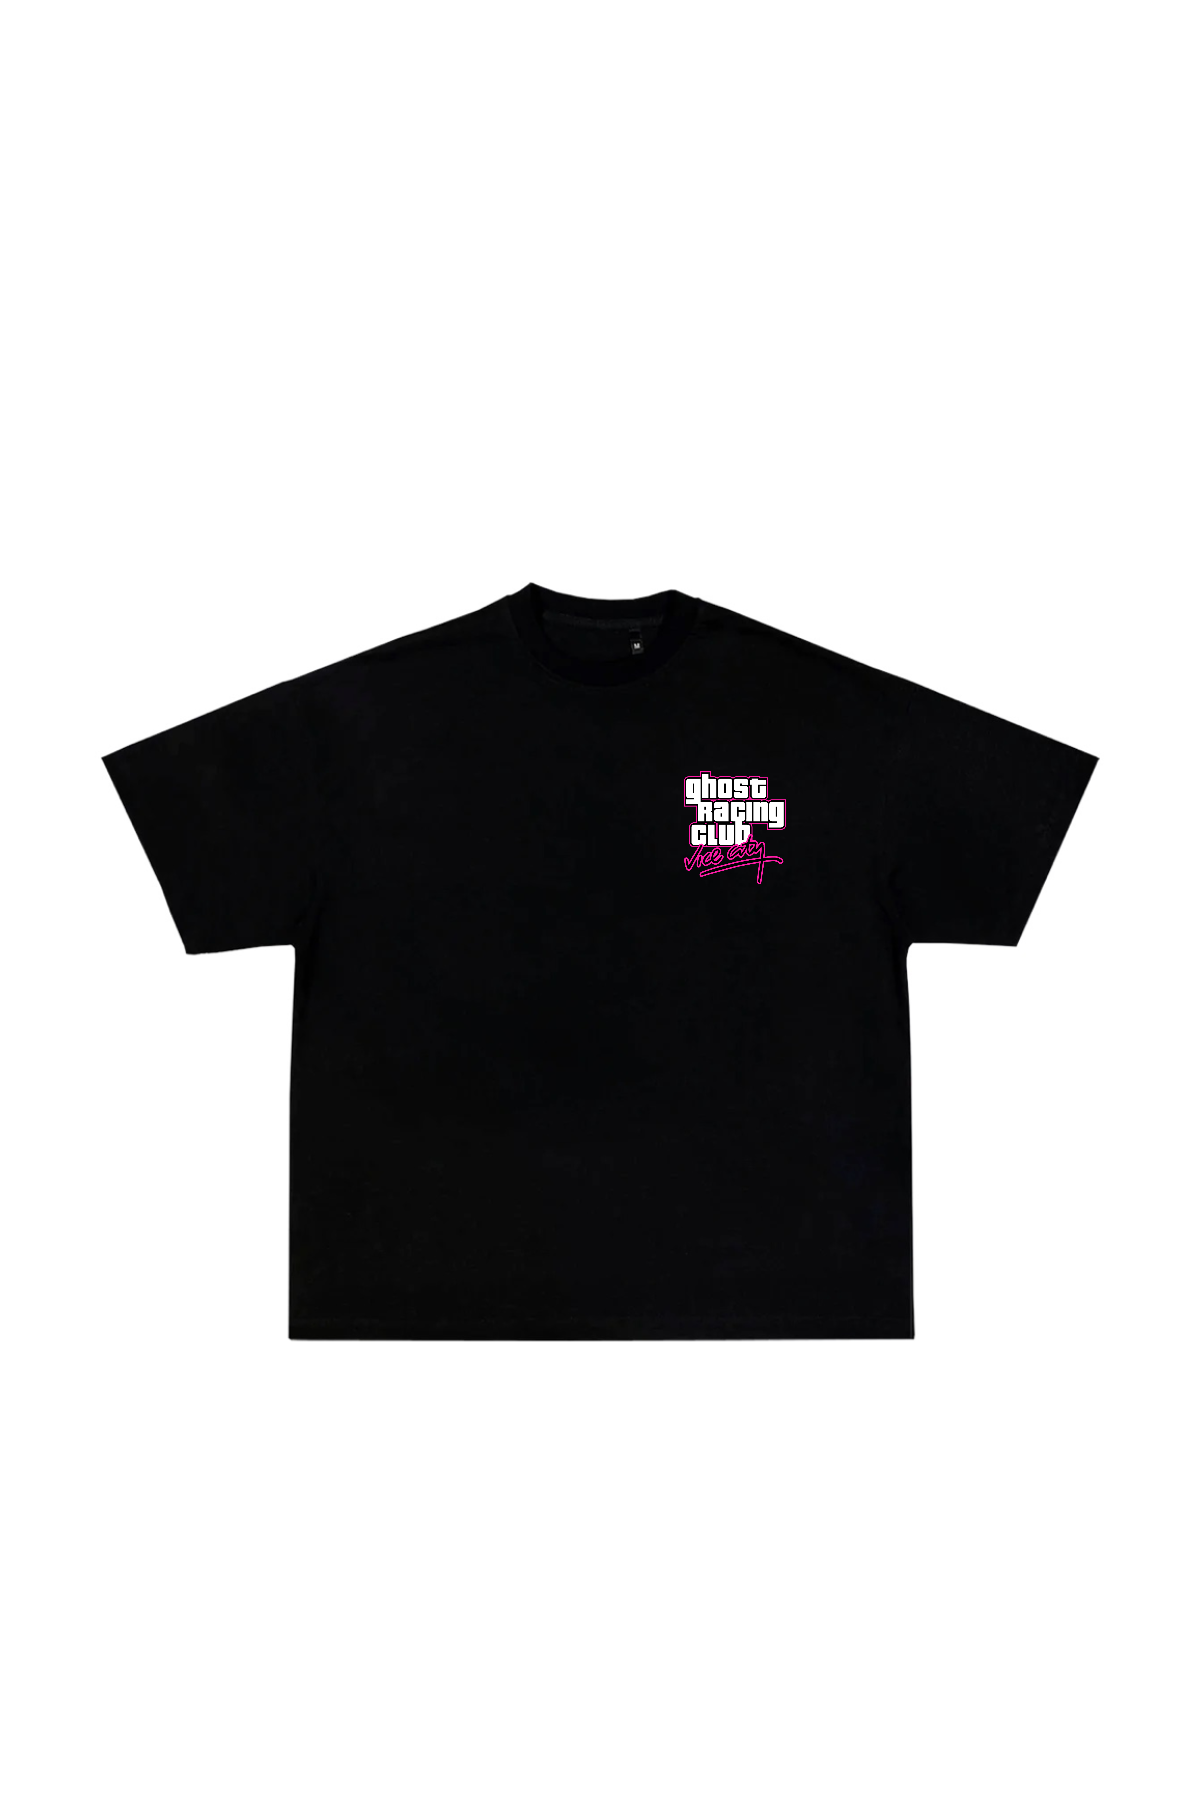 MIAMI VICE Ghost Shirt - Black